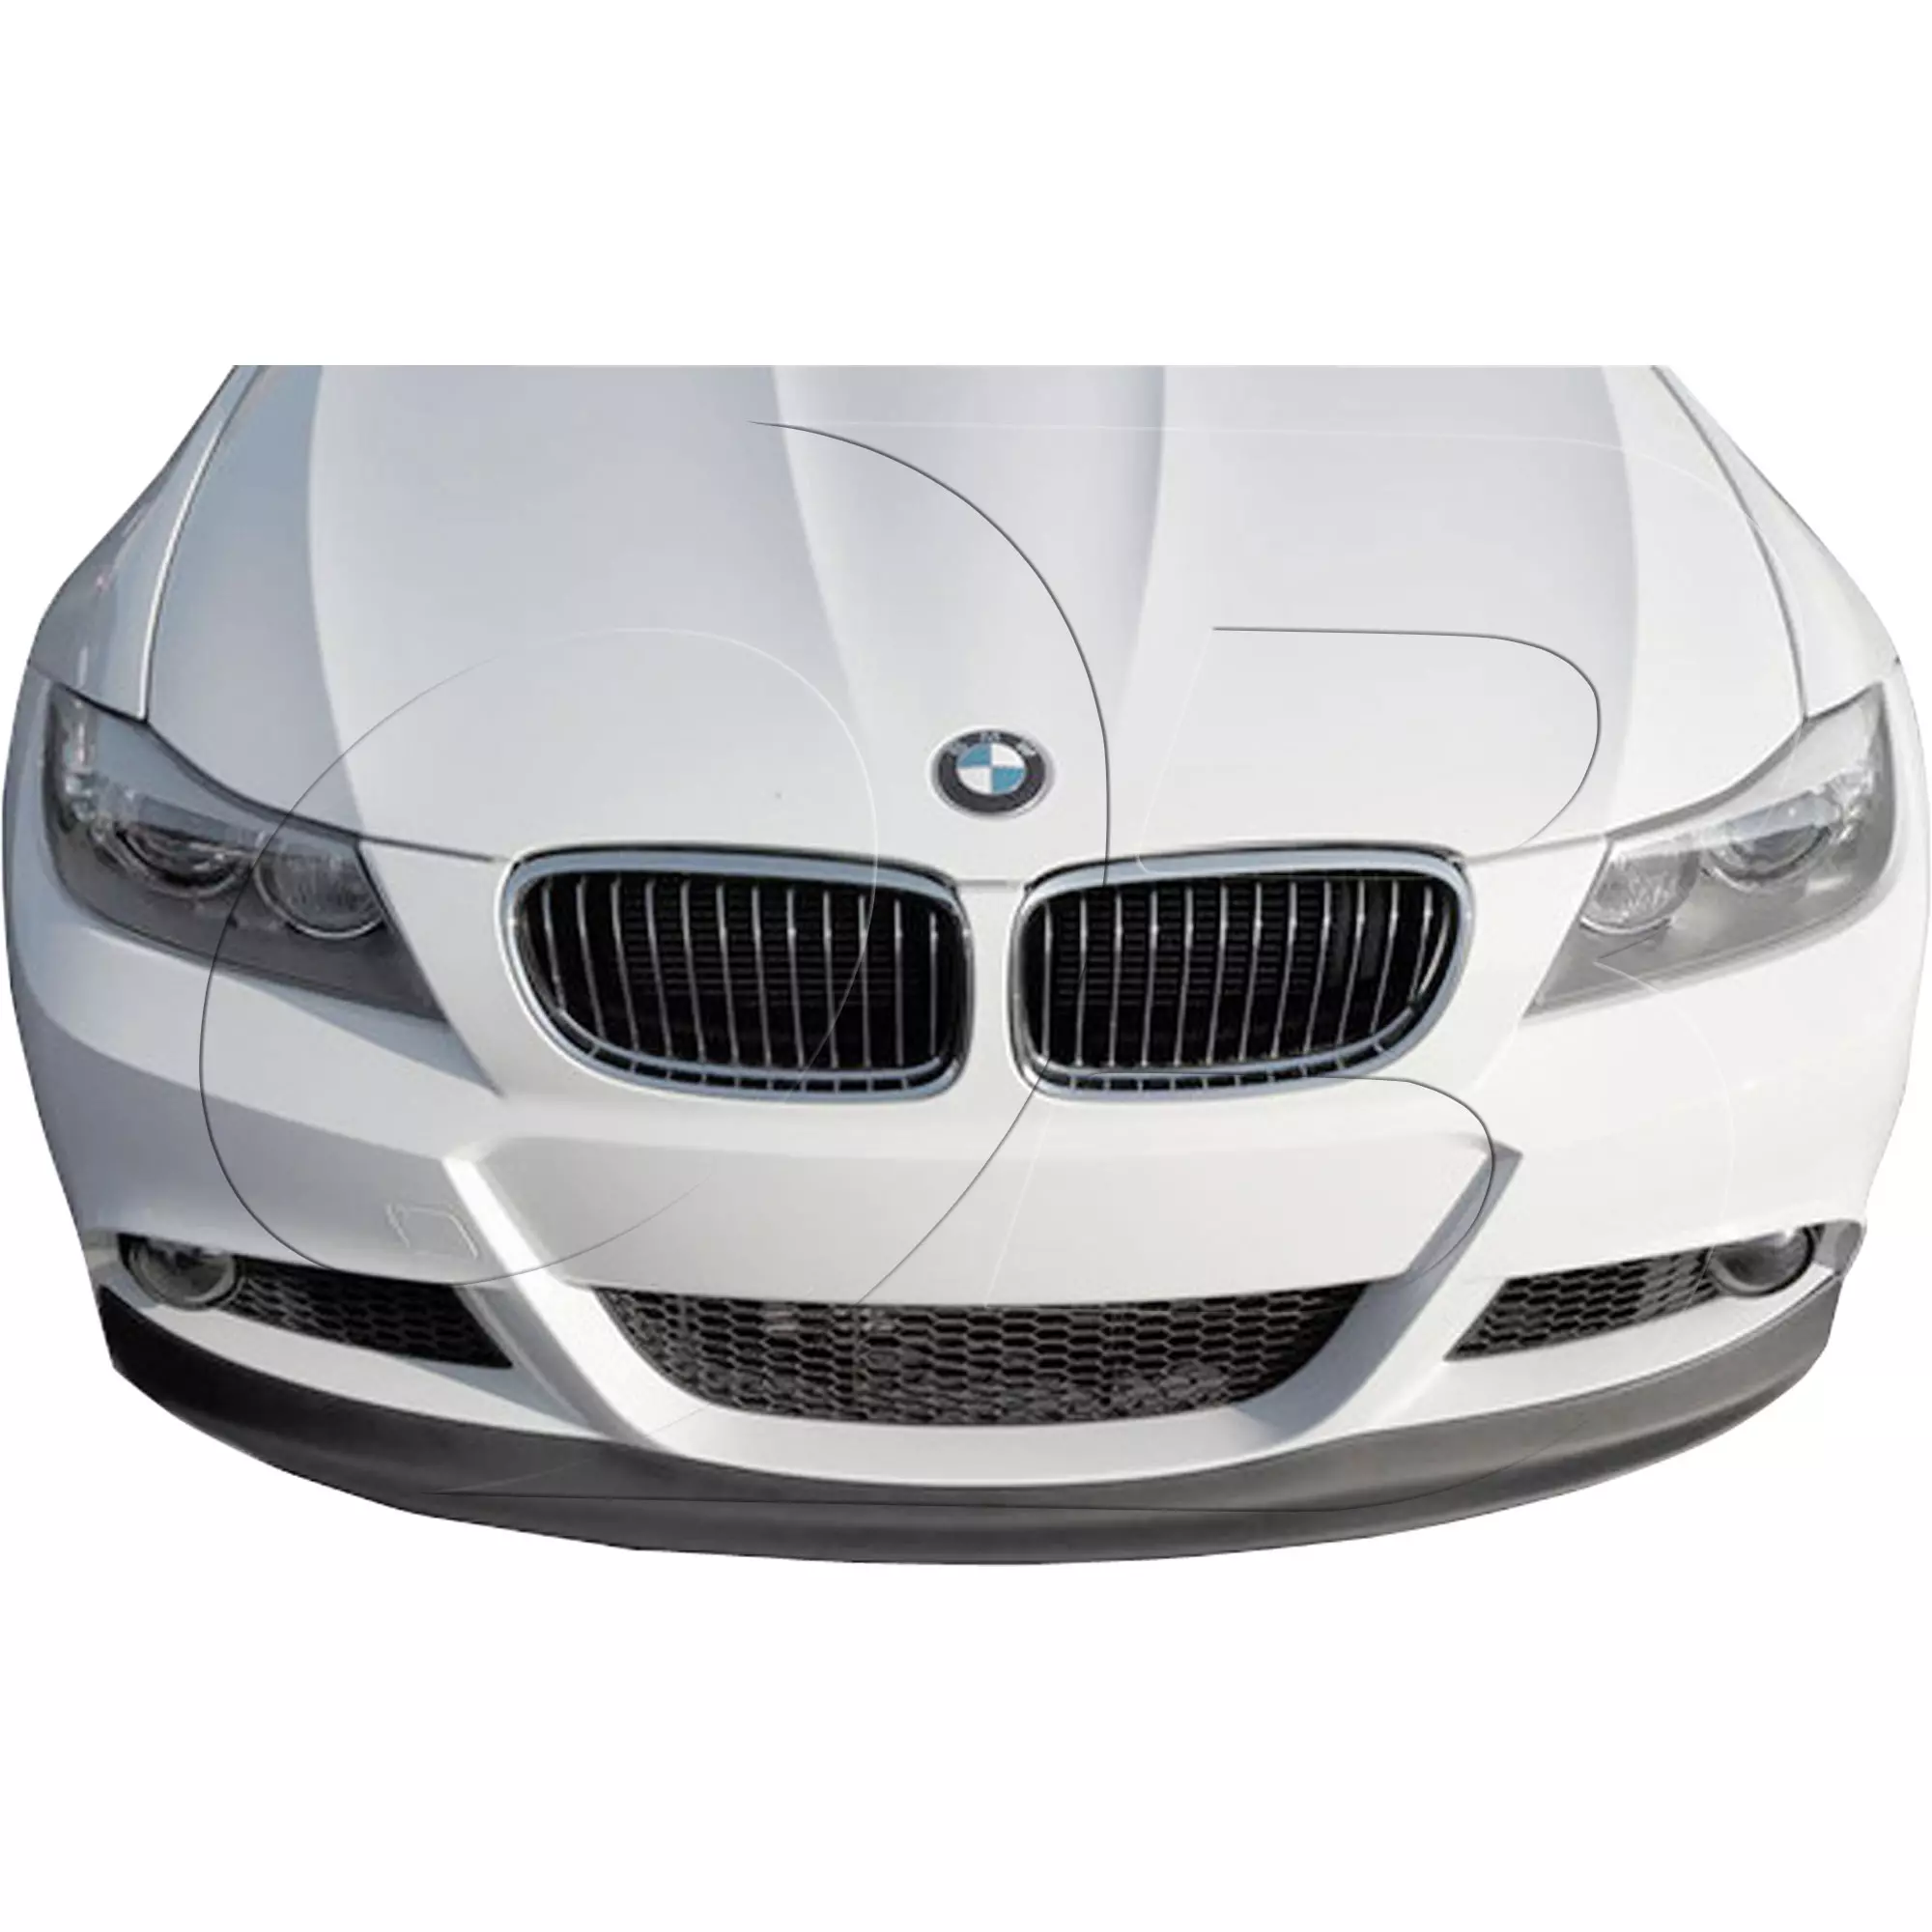 KBD Urethane VKM Style 1pc Front Lip > BMW 3 Series 2009-2011 - Image 2